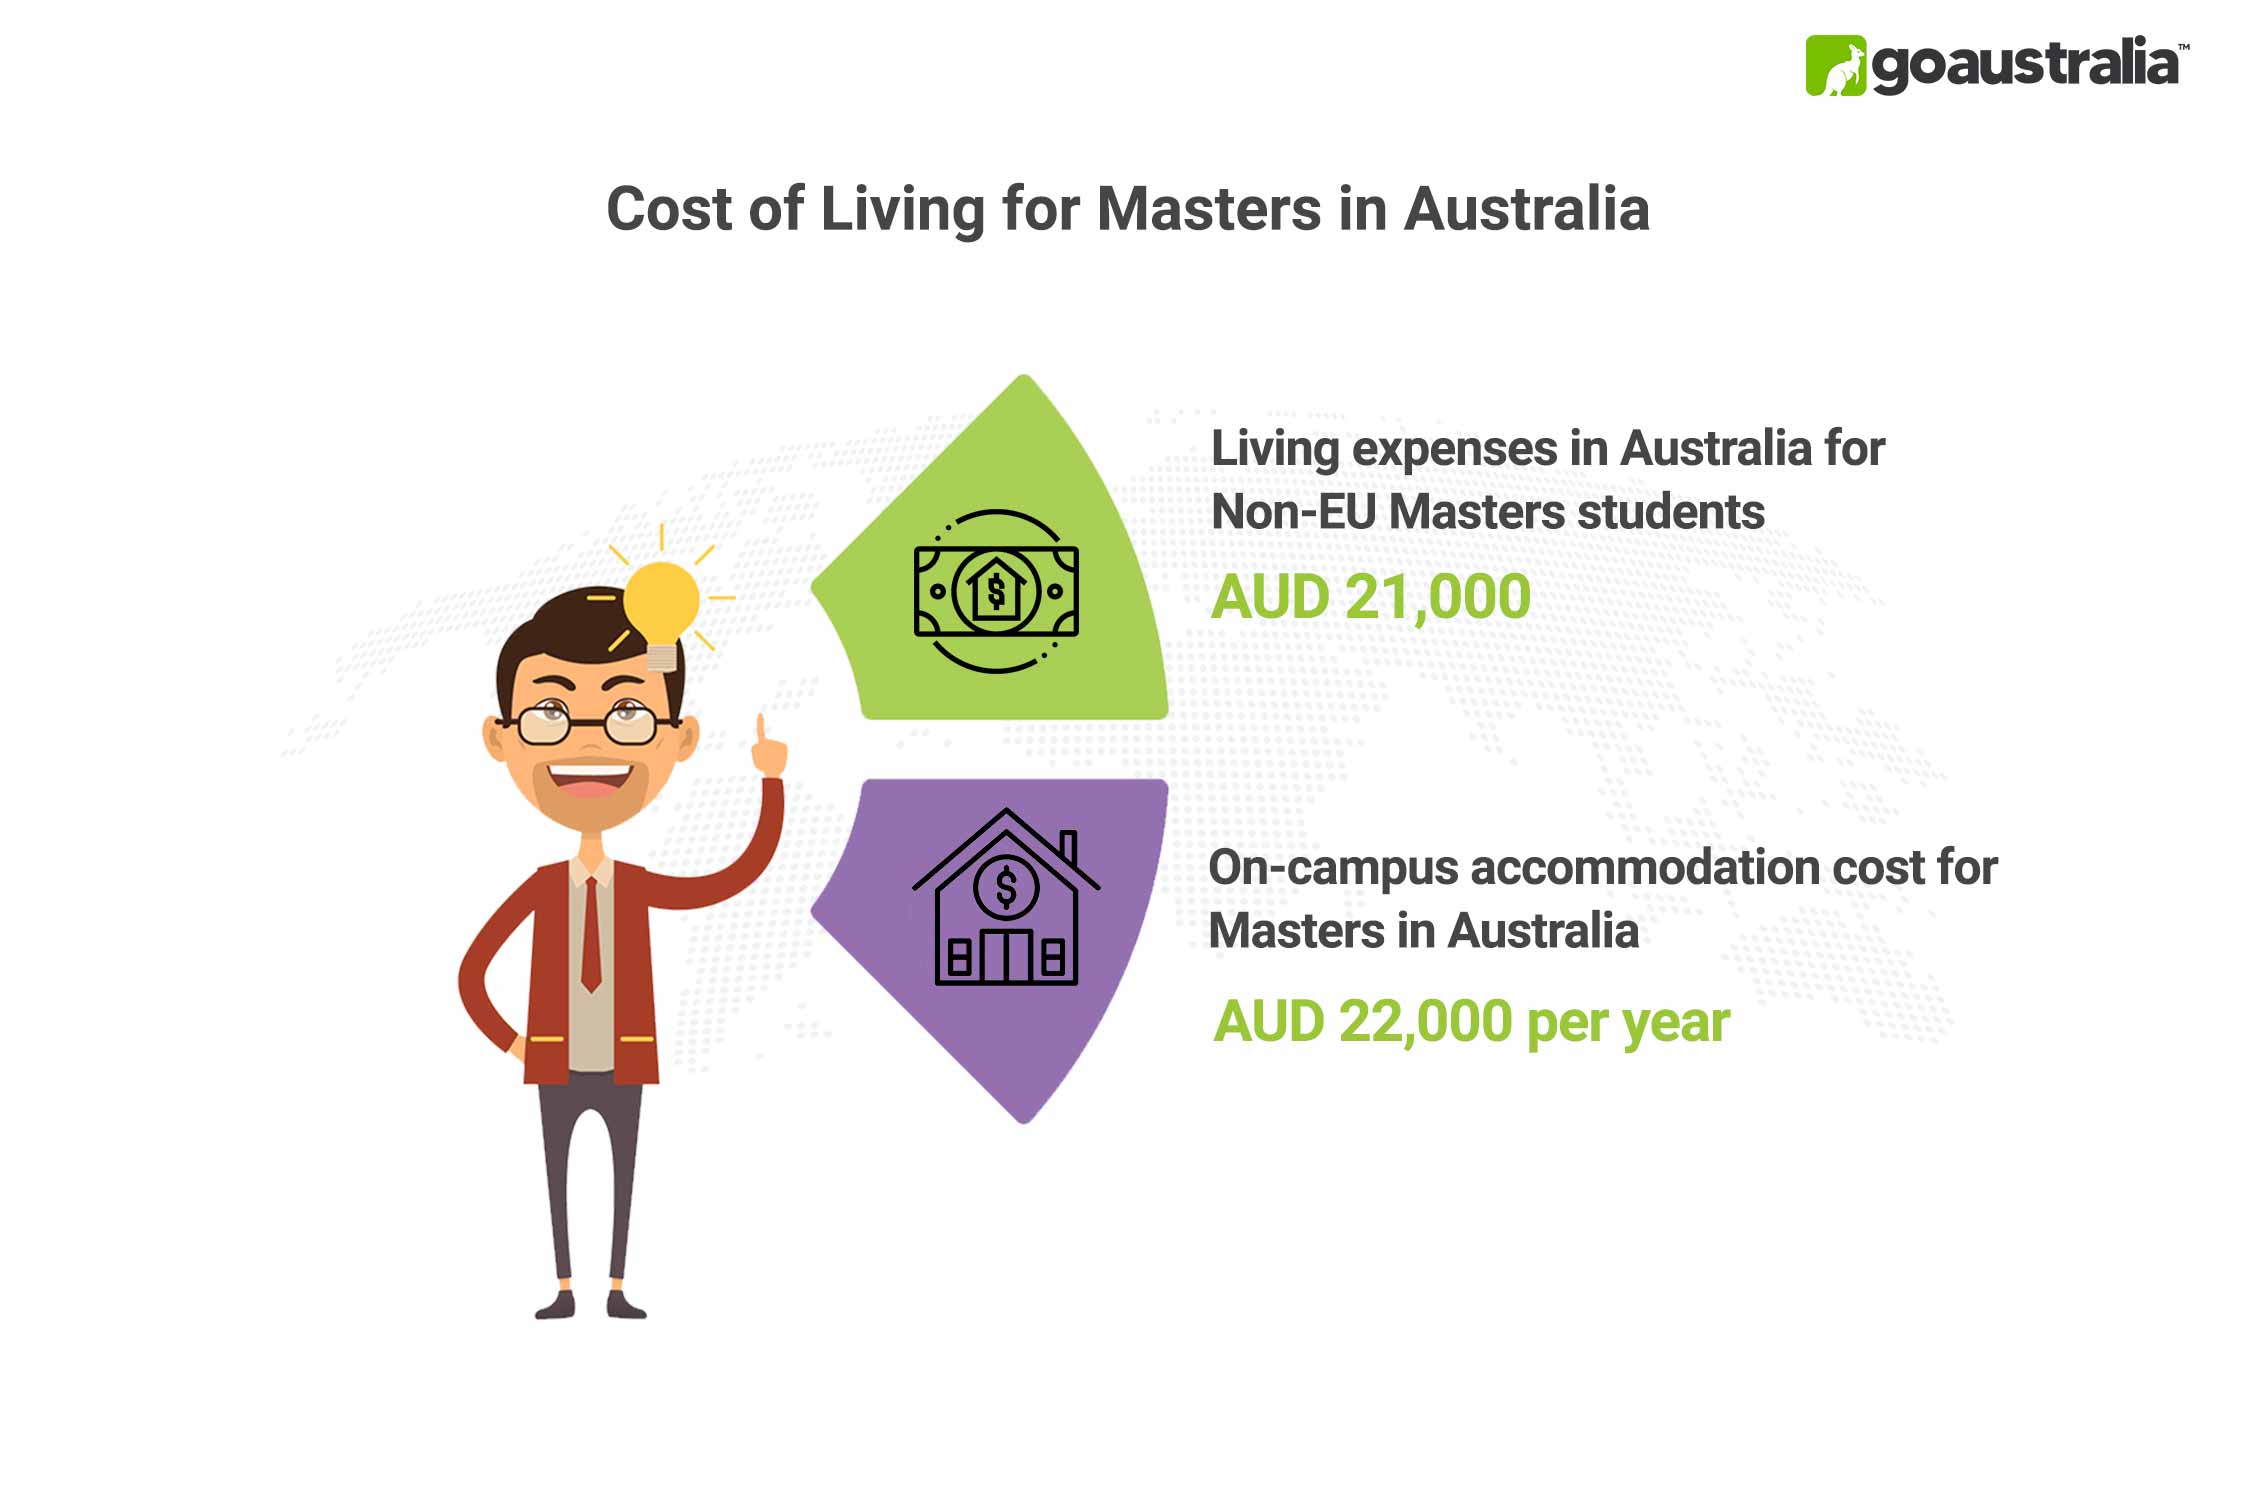 Masters in Australia Cost